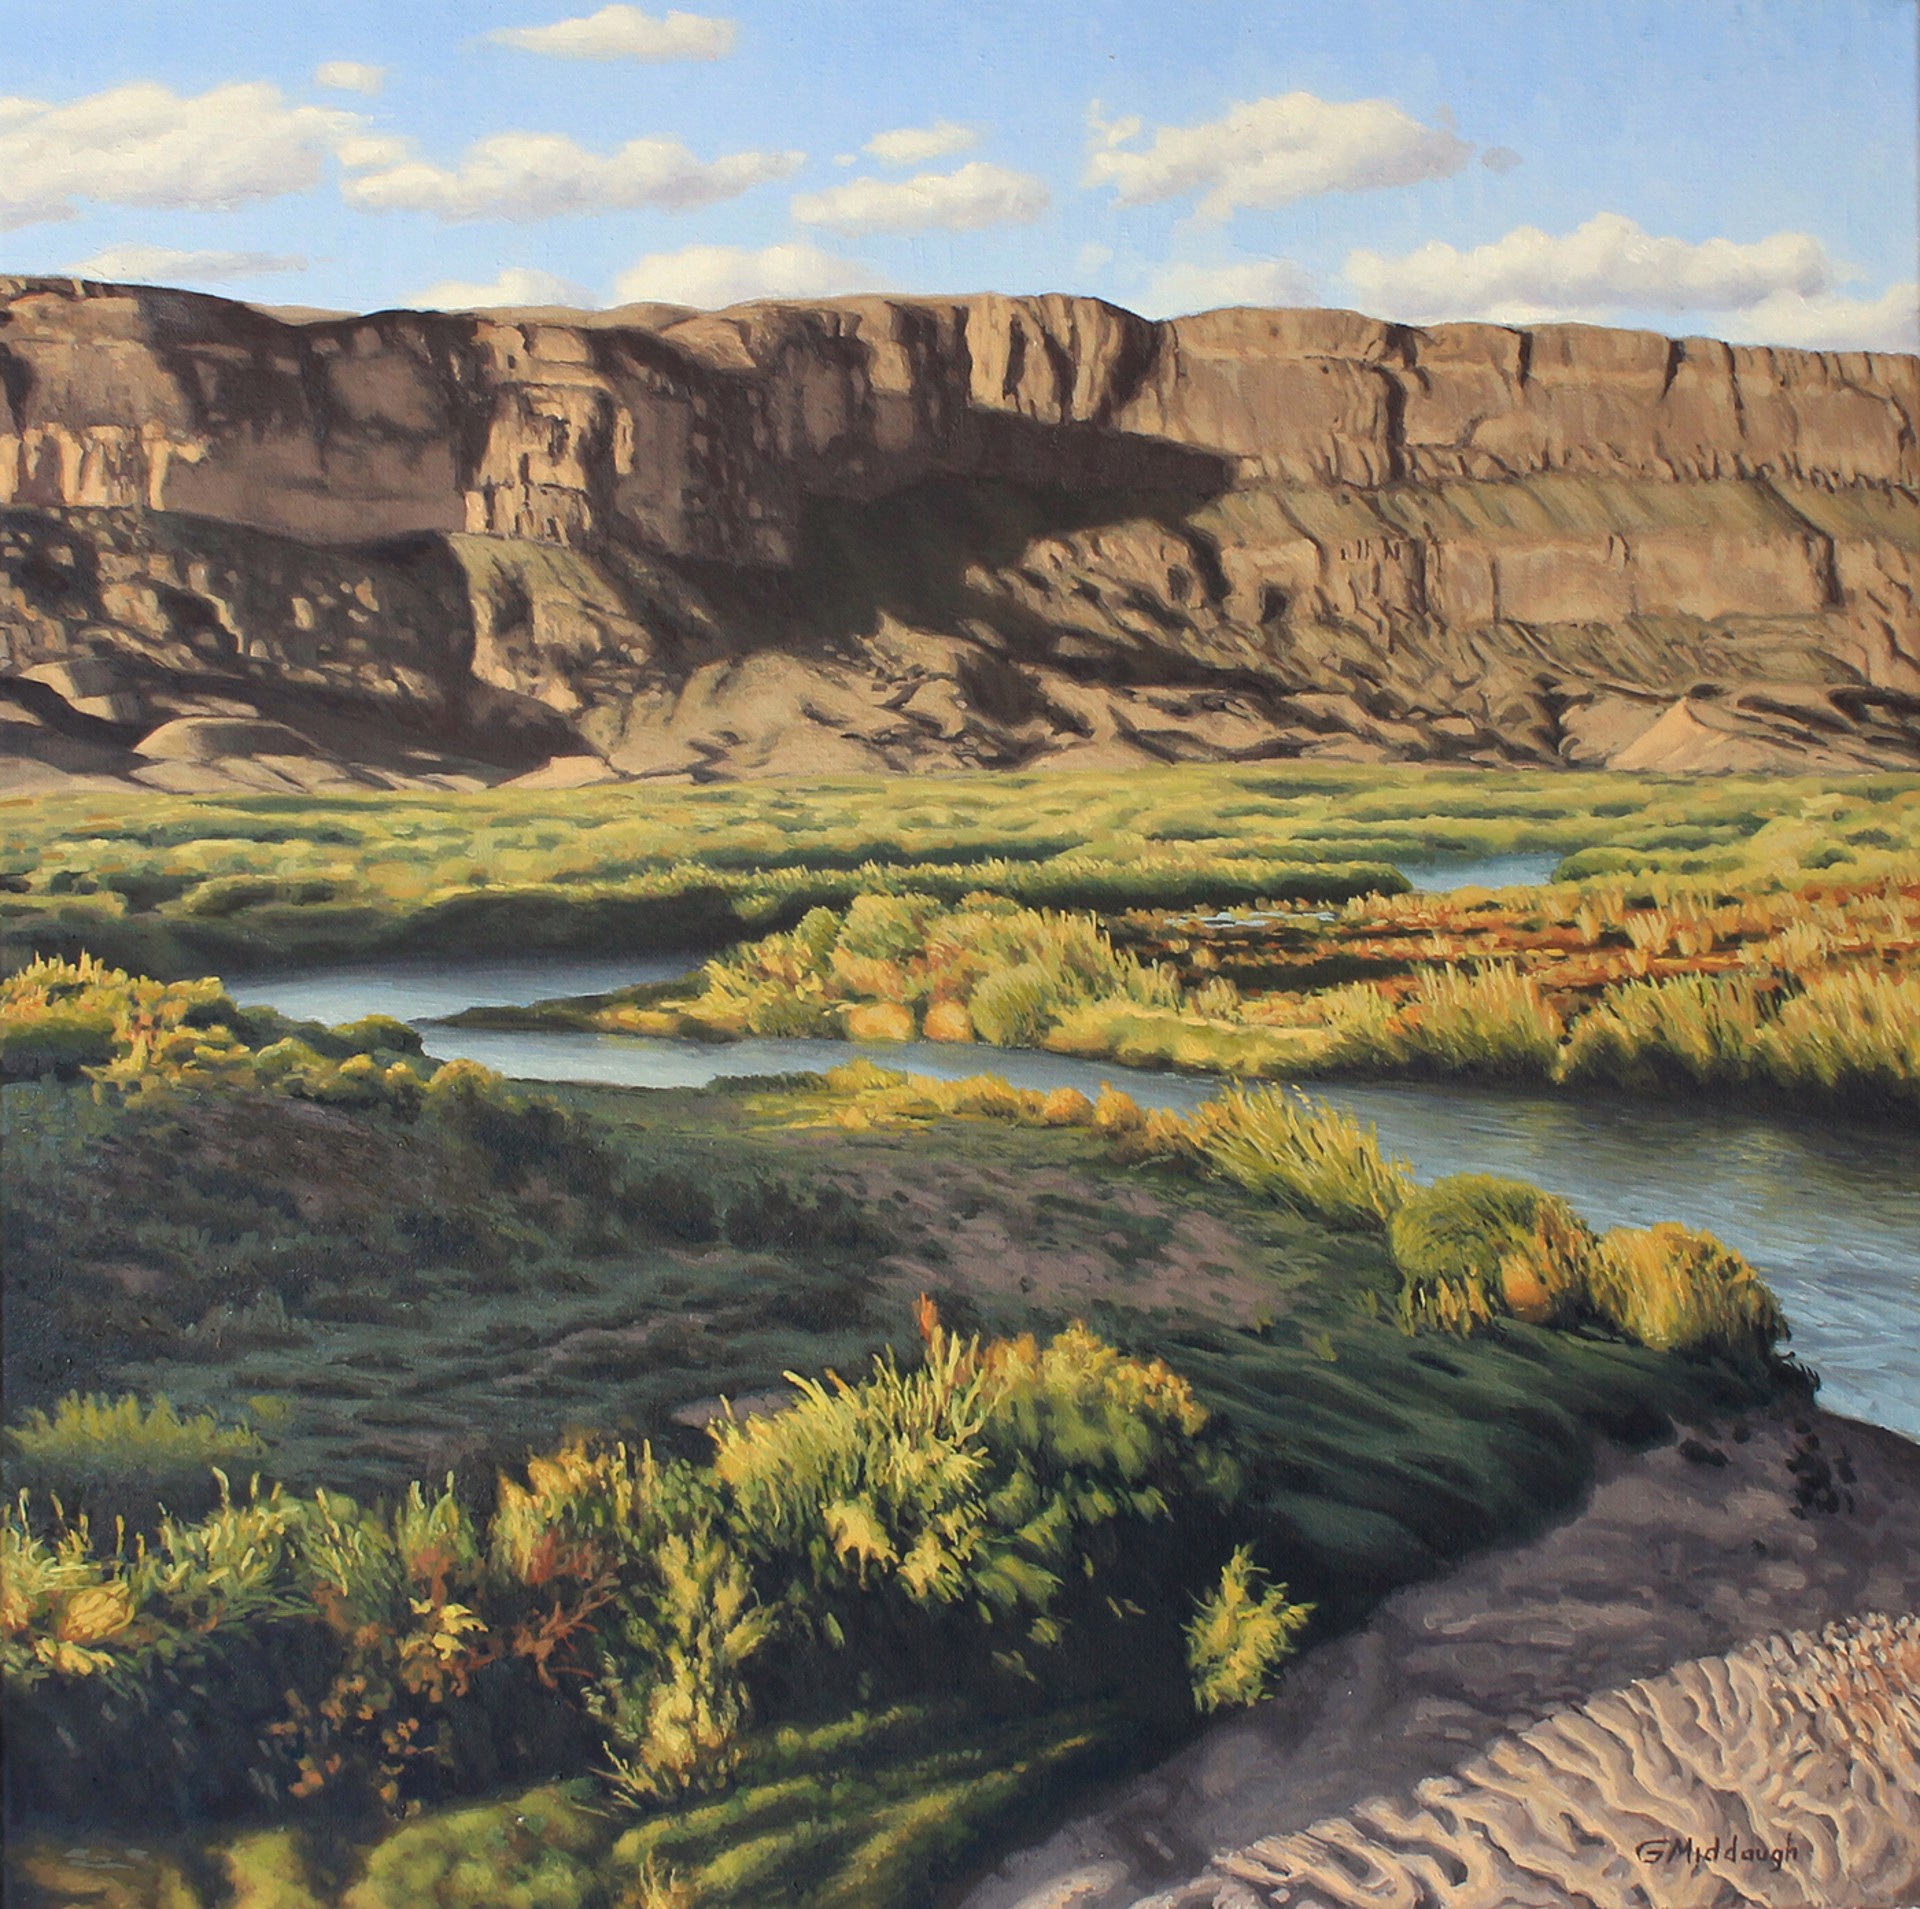 Rio Grande by the Sierra Ponce Cliffs by Garrett Middaugh